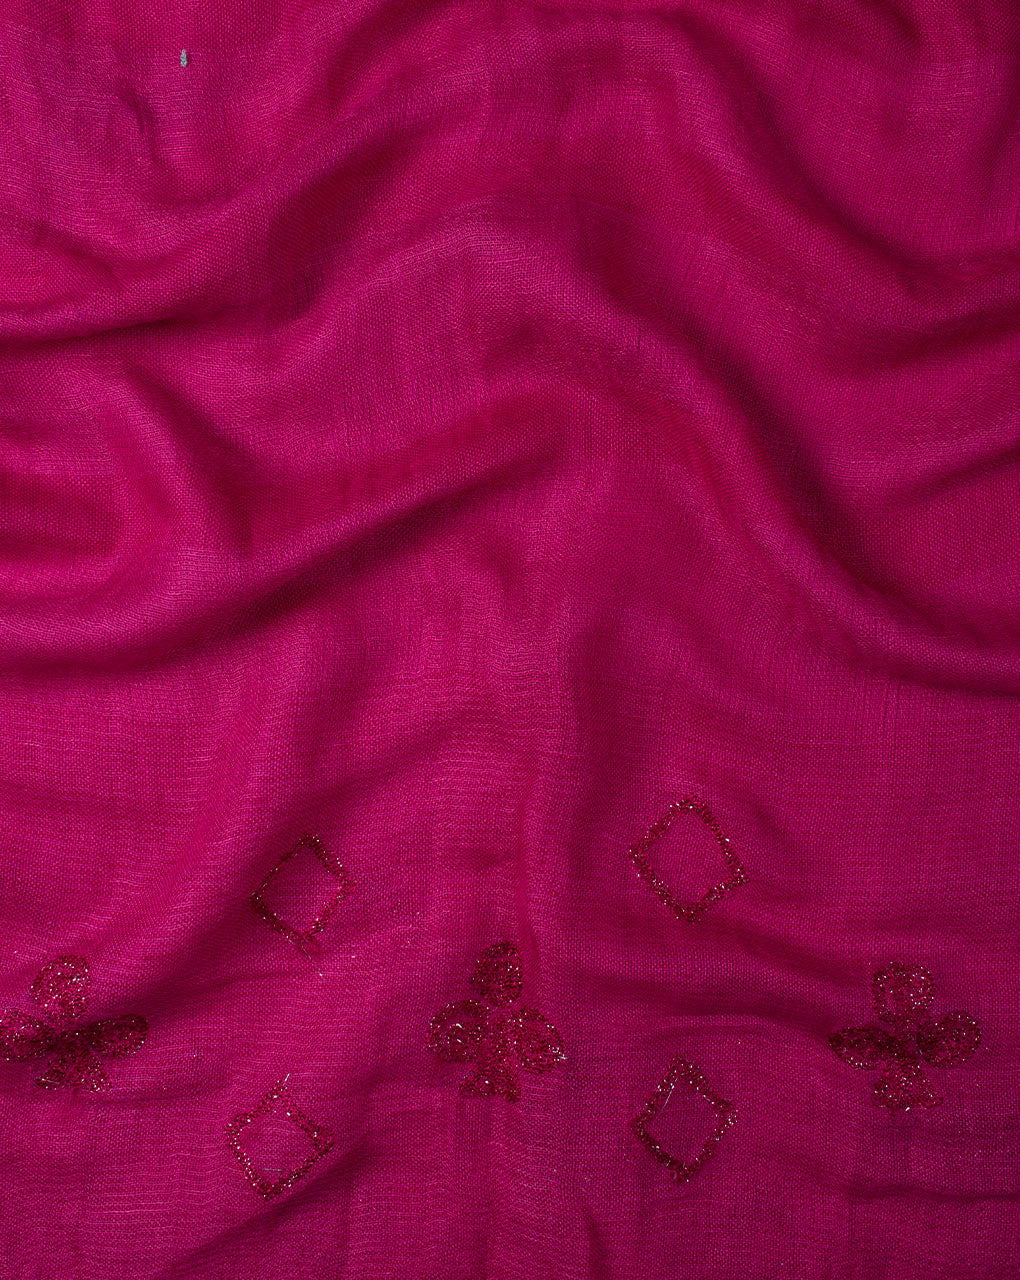 Floral Woven Bhagalpuri Viscose Stole - Fabriclore.com